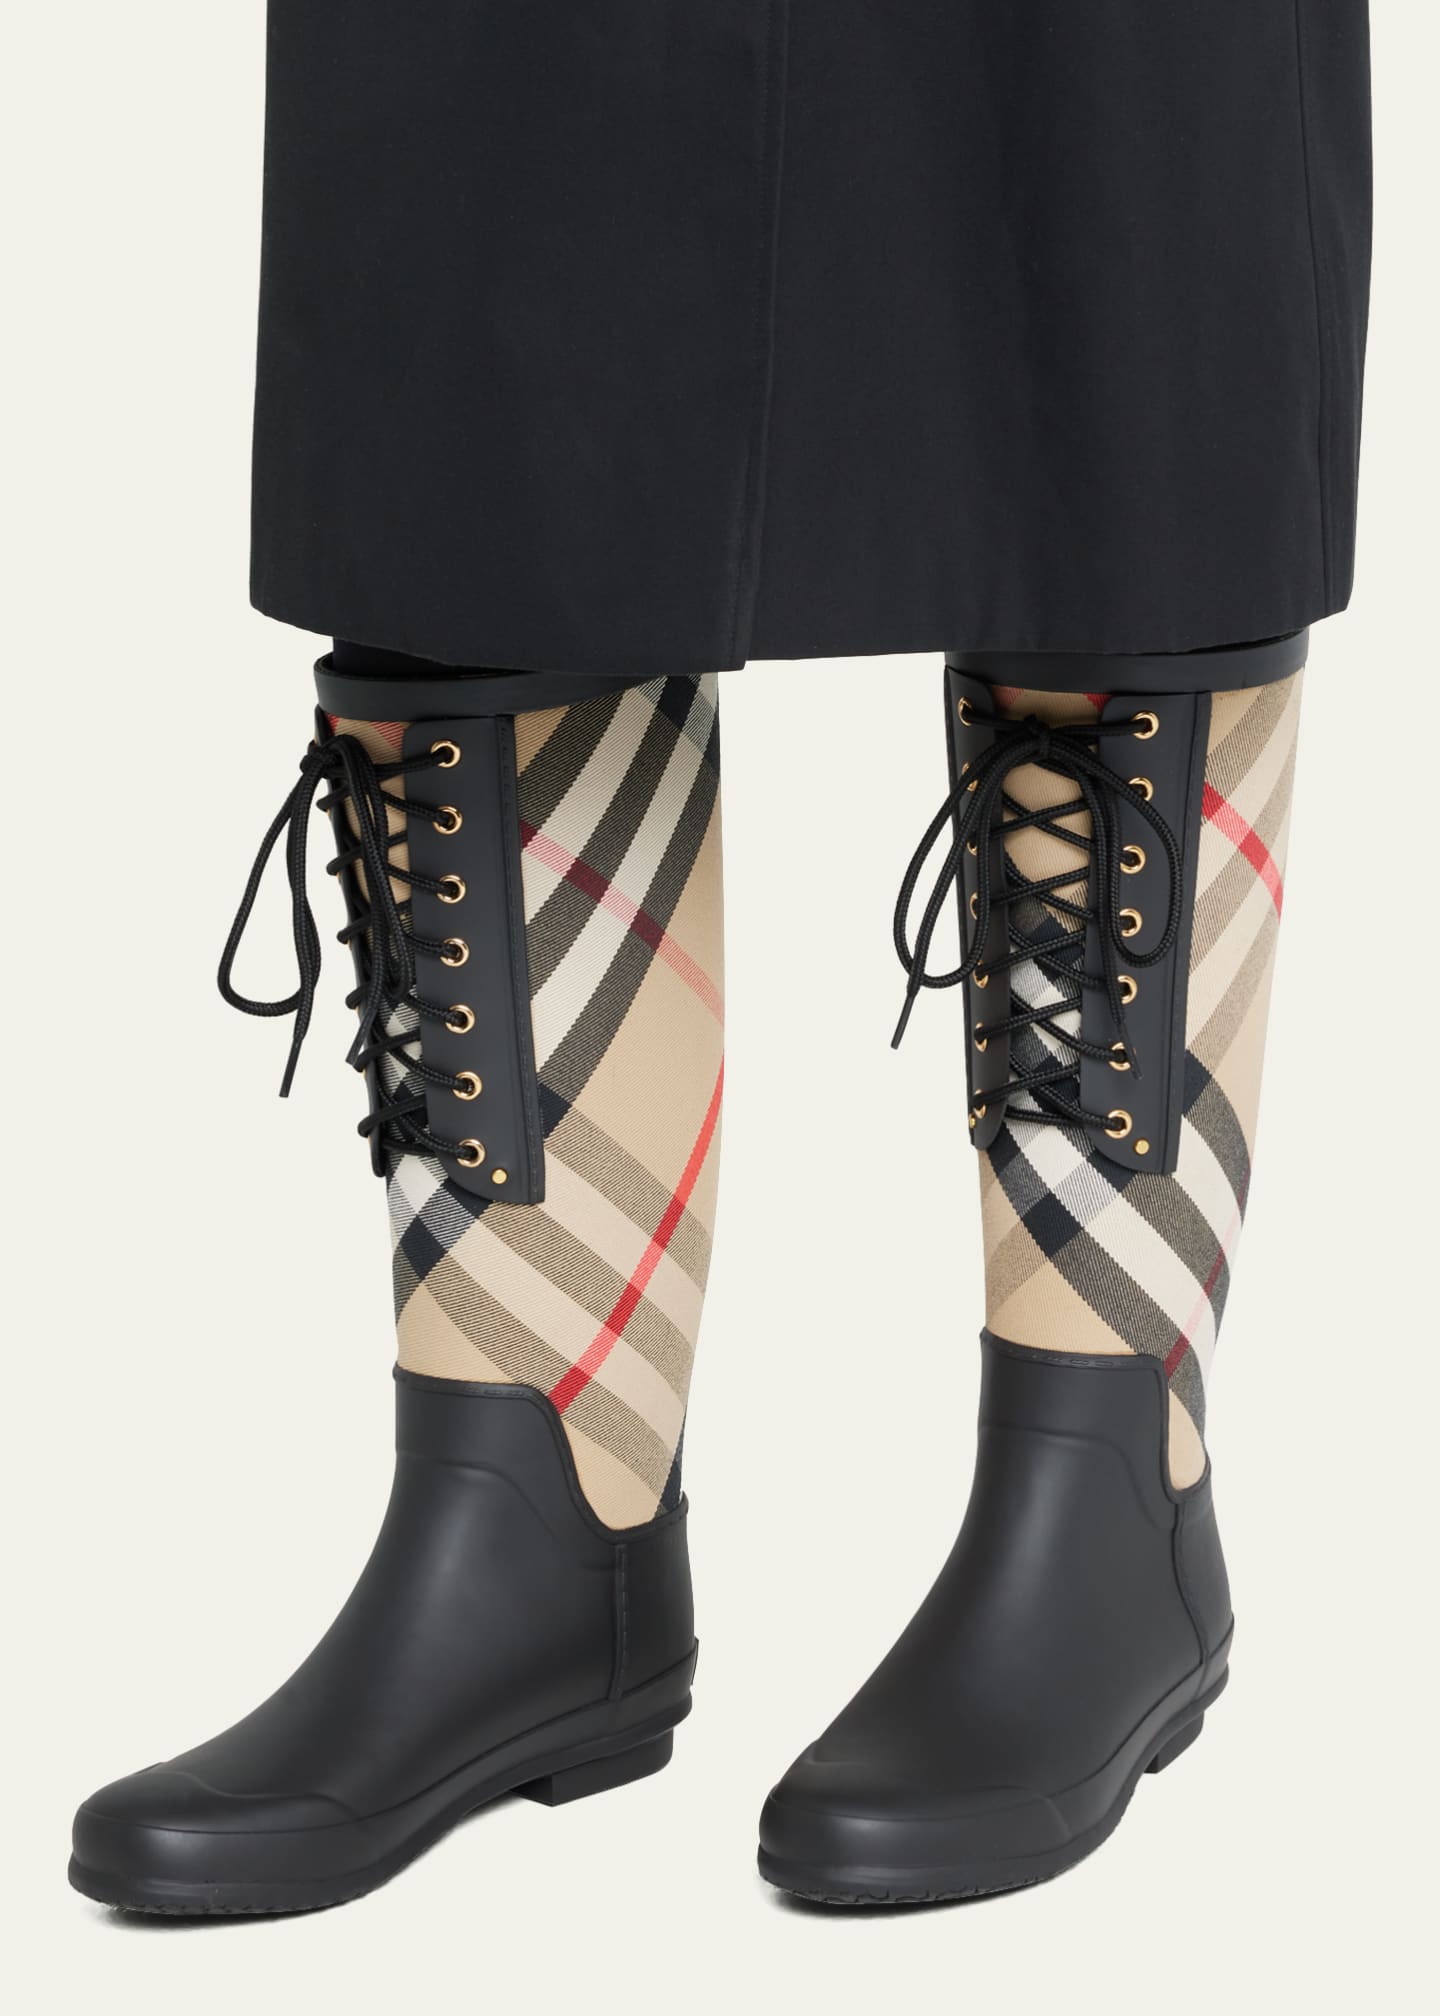 Burberry Simeon Check Lace-Up Rain Boots - Goodman